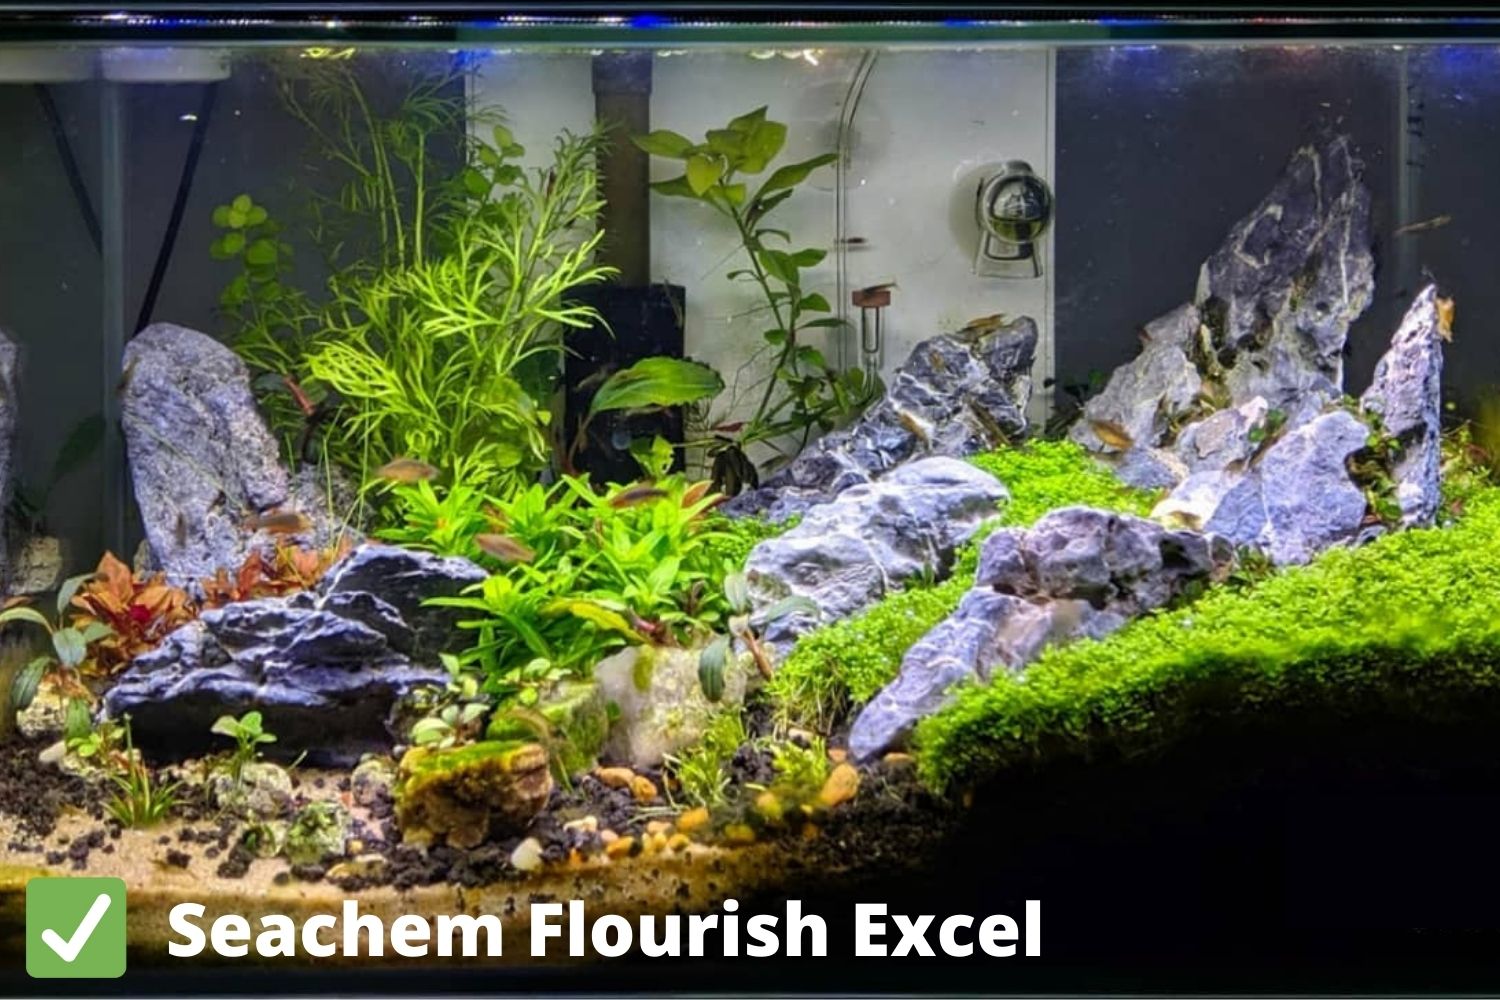 after using seachem flourish excel for algae